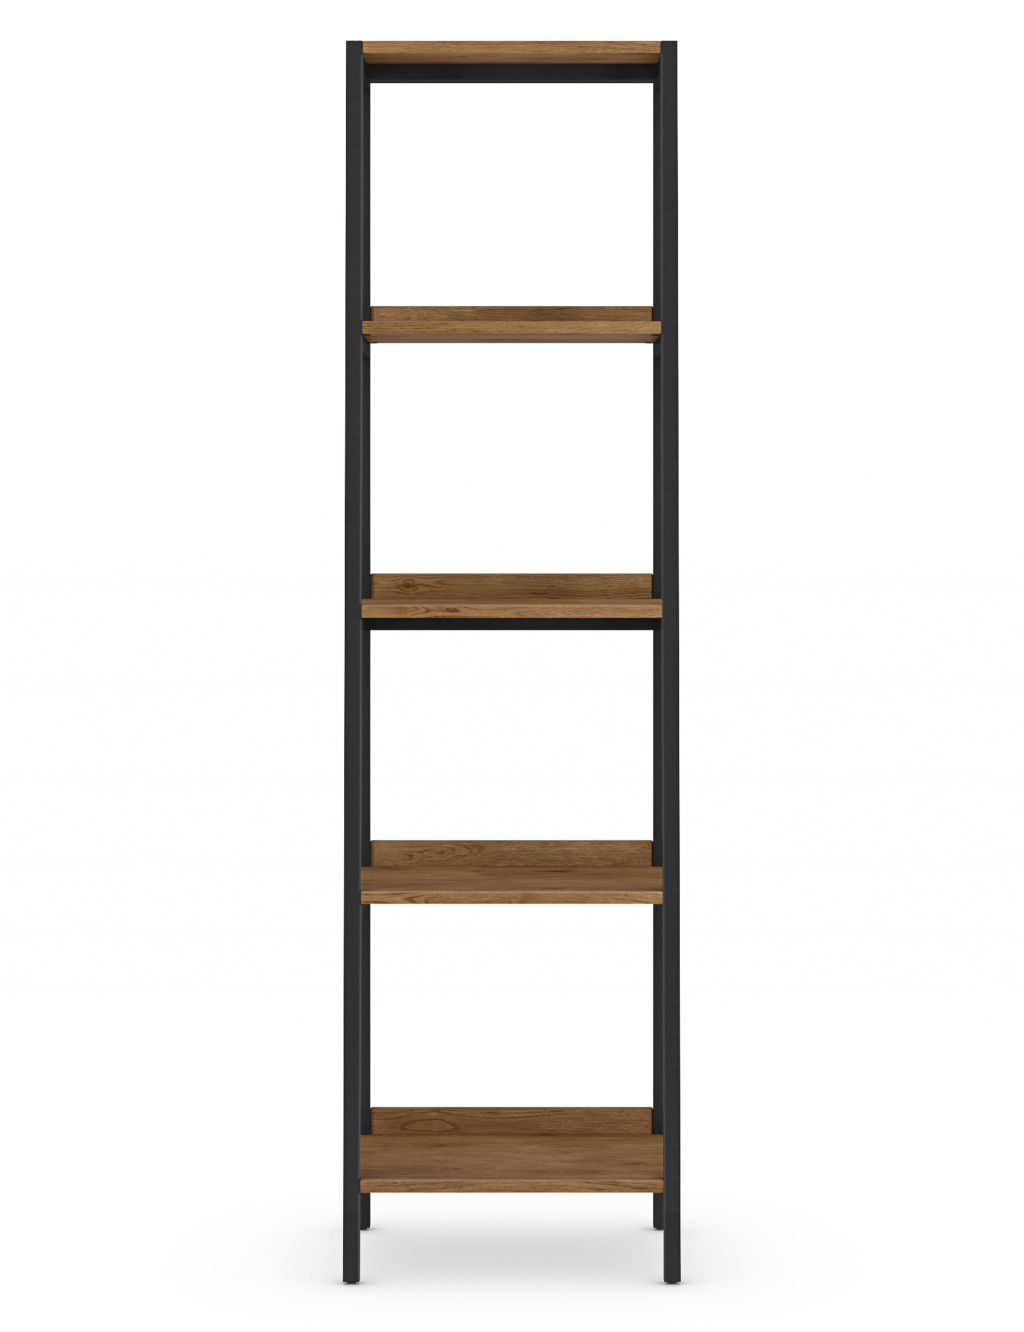 Brookland Narrow Ladder Shelves